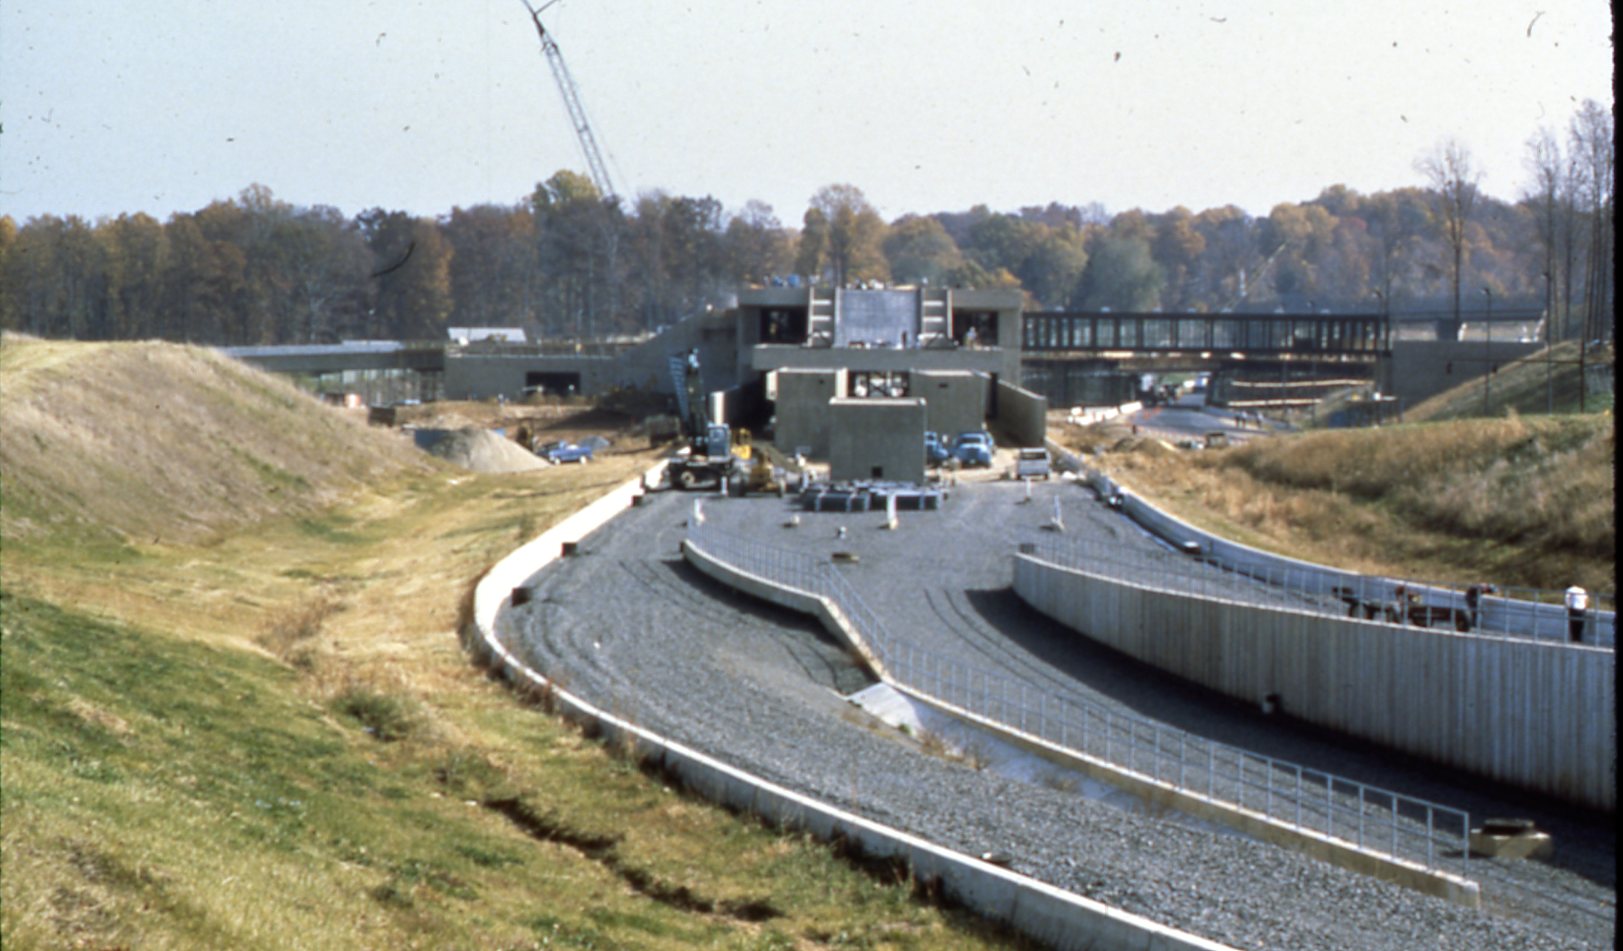 West Falls Church Station - November 1982